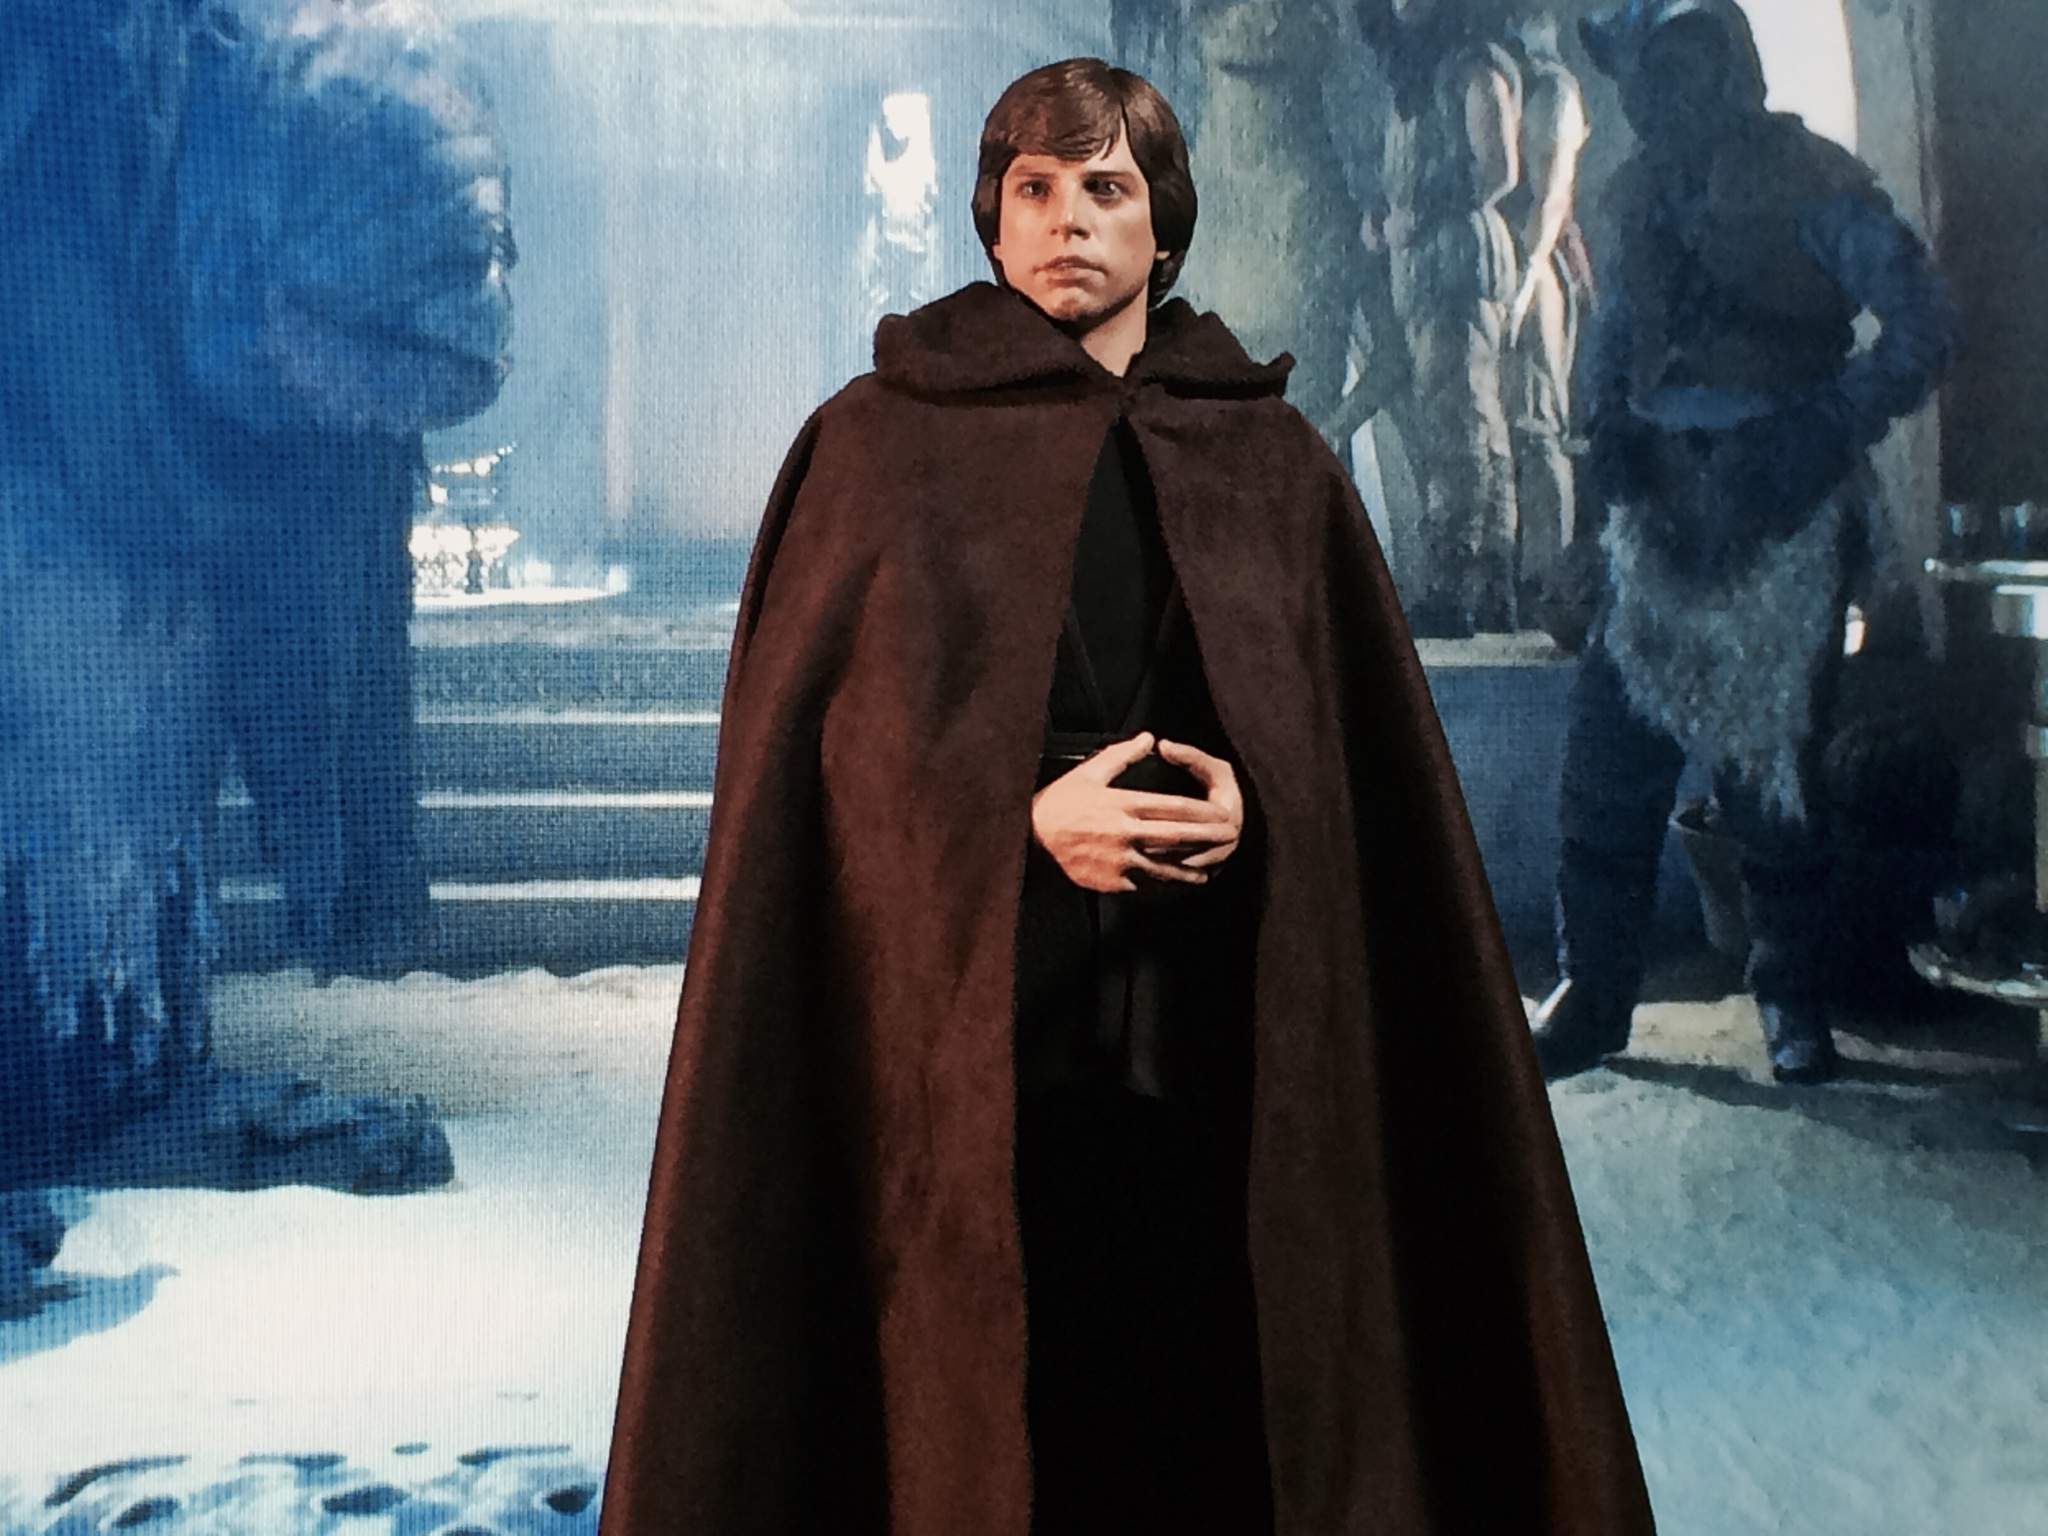 Hot Toys Star Wars Return of the Jedi: Luke Skywalker 1:6 Scale Figure Photohoot. Star Wars Amino